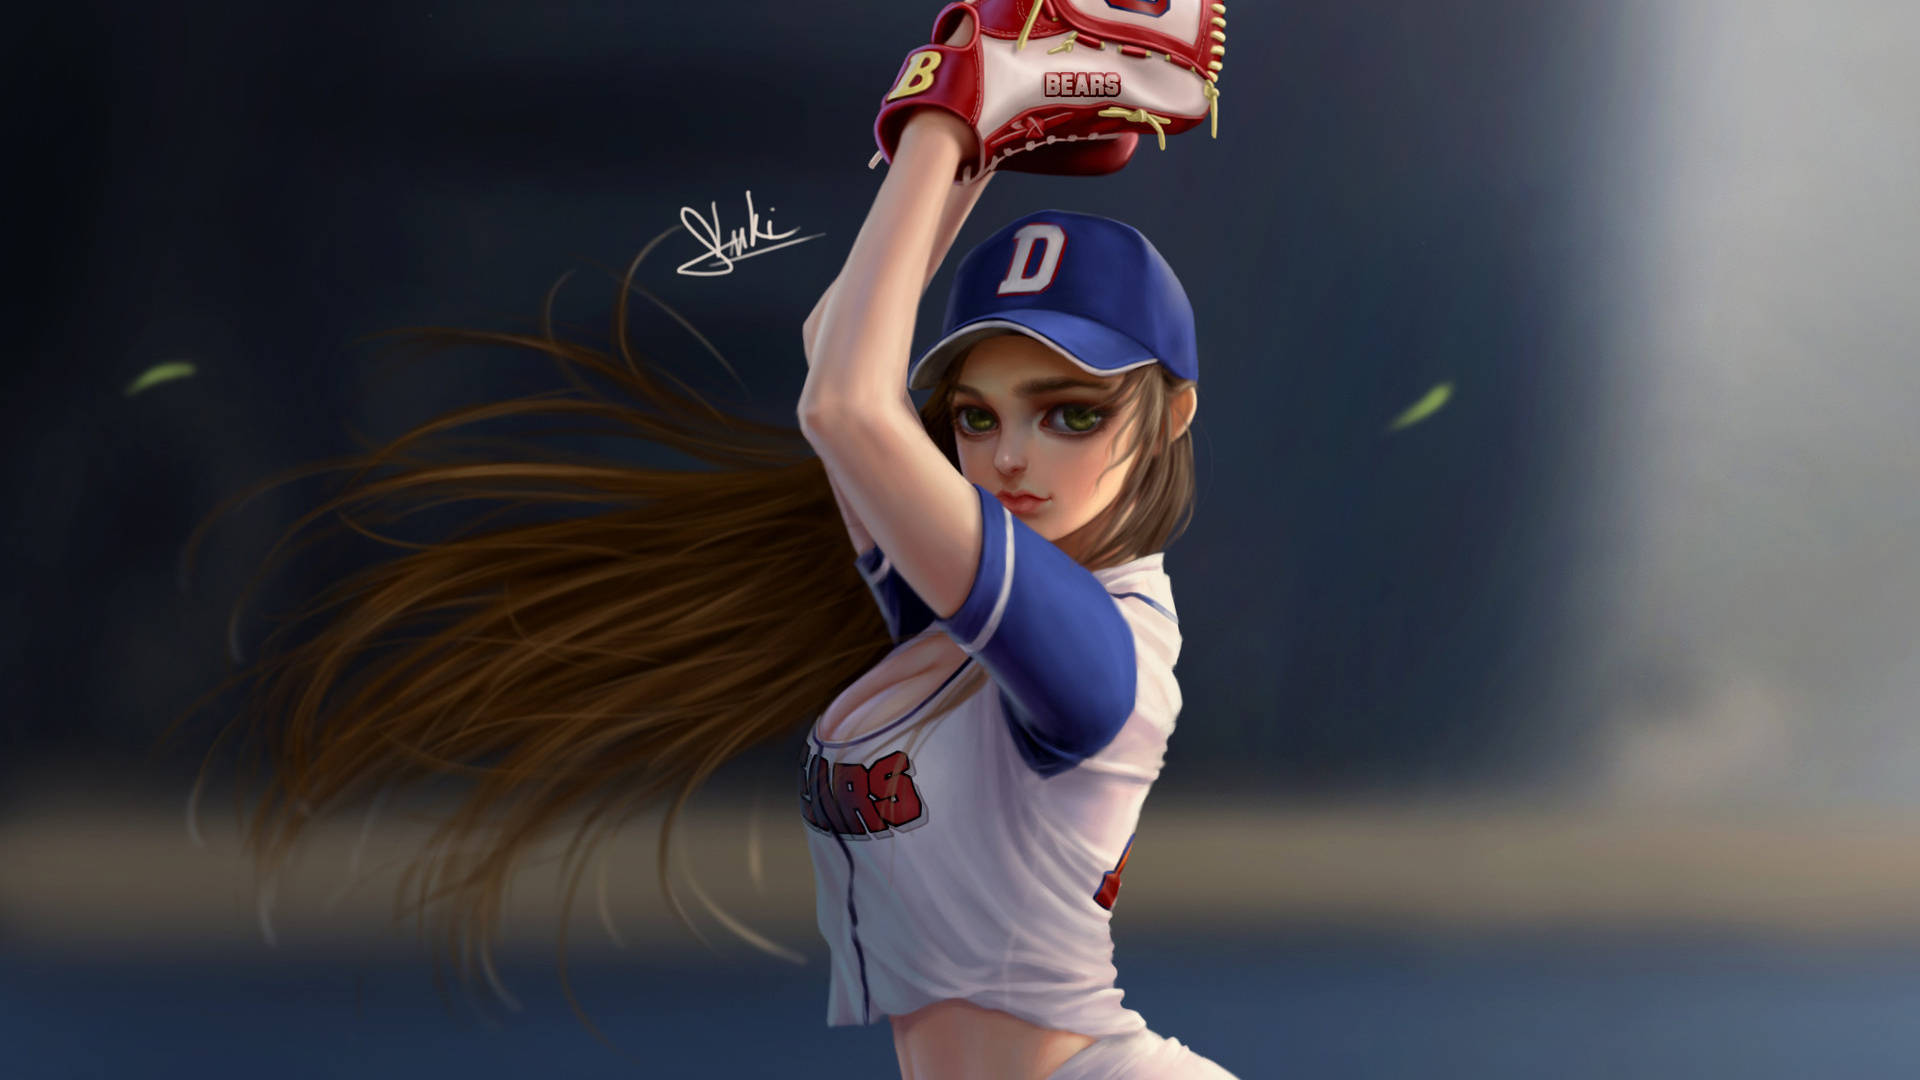 Cute Softball Anime Player Wallpaper